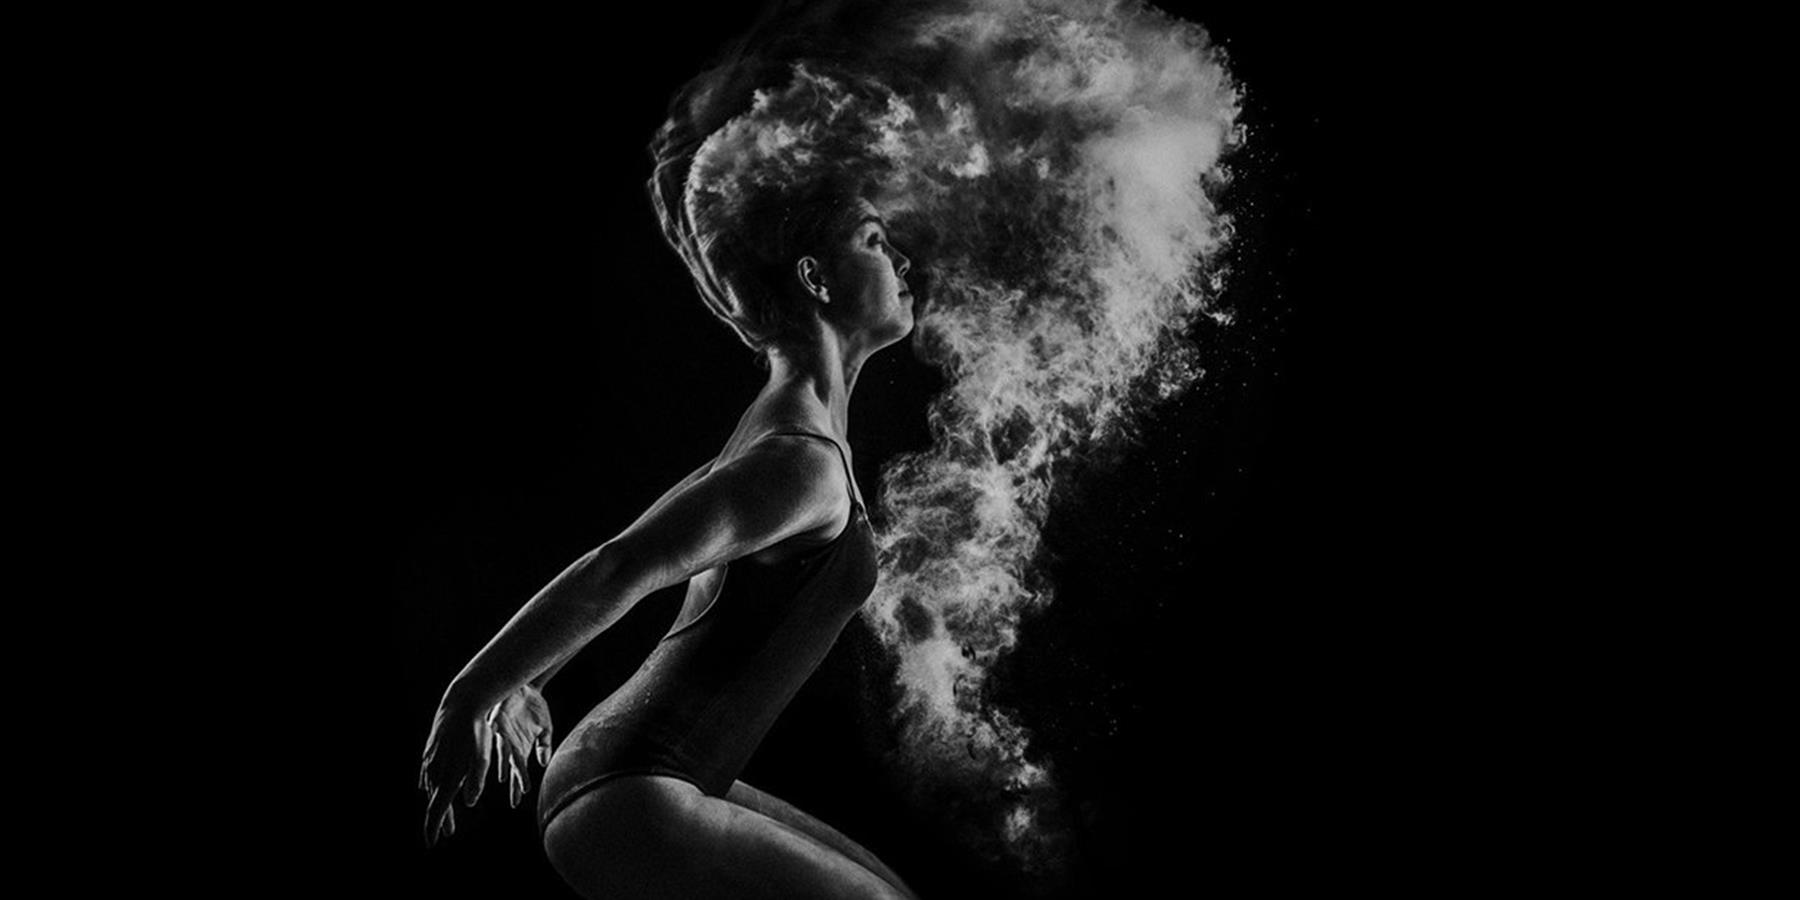 Contemporary dancer with smoky background